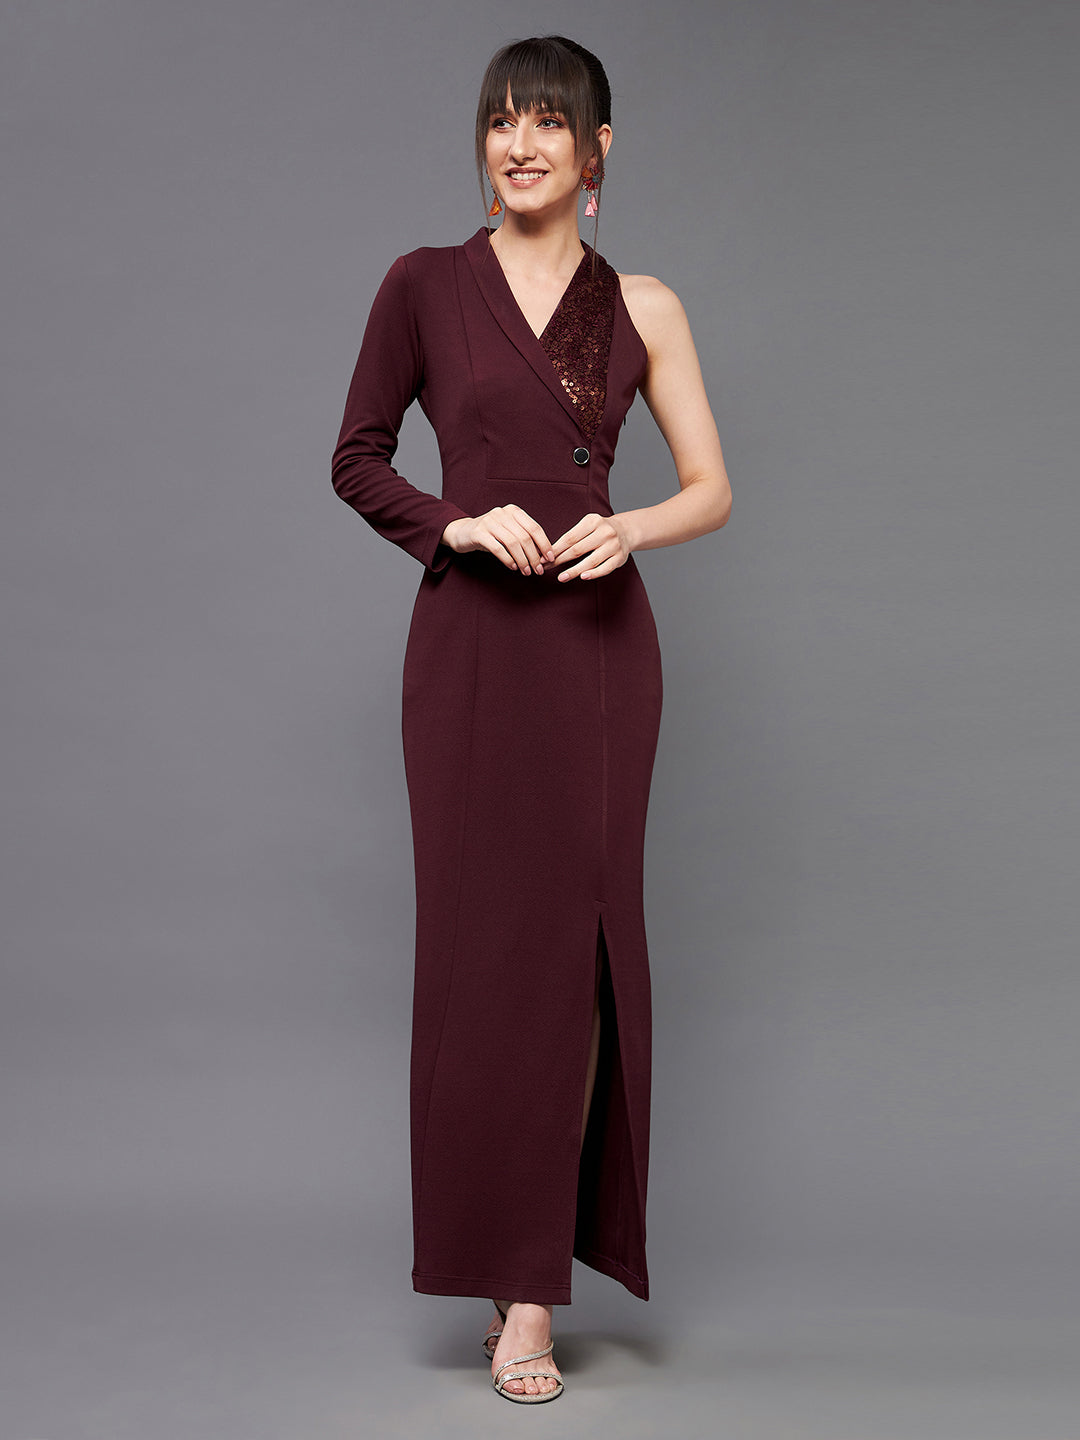 Women's Wine V Neck Asymmetric Sleeve Embellished Blazer Maxi Dress